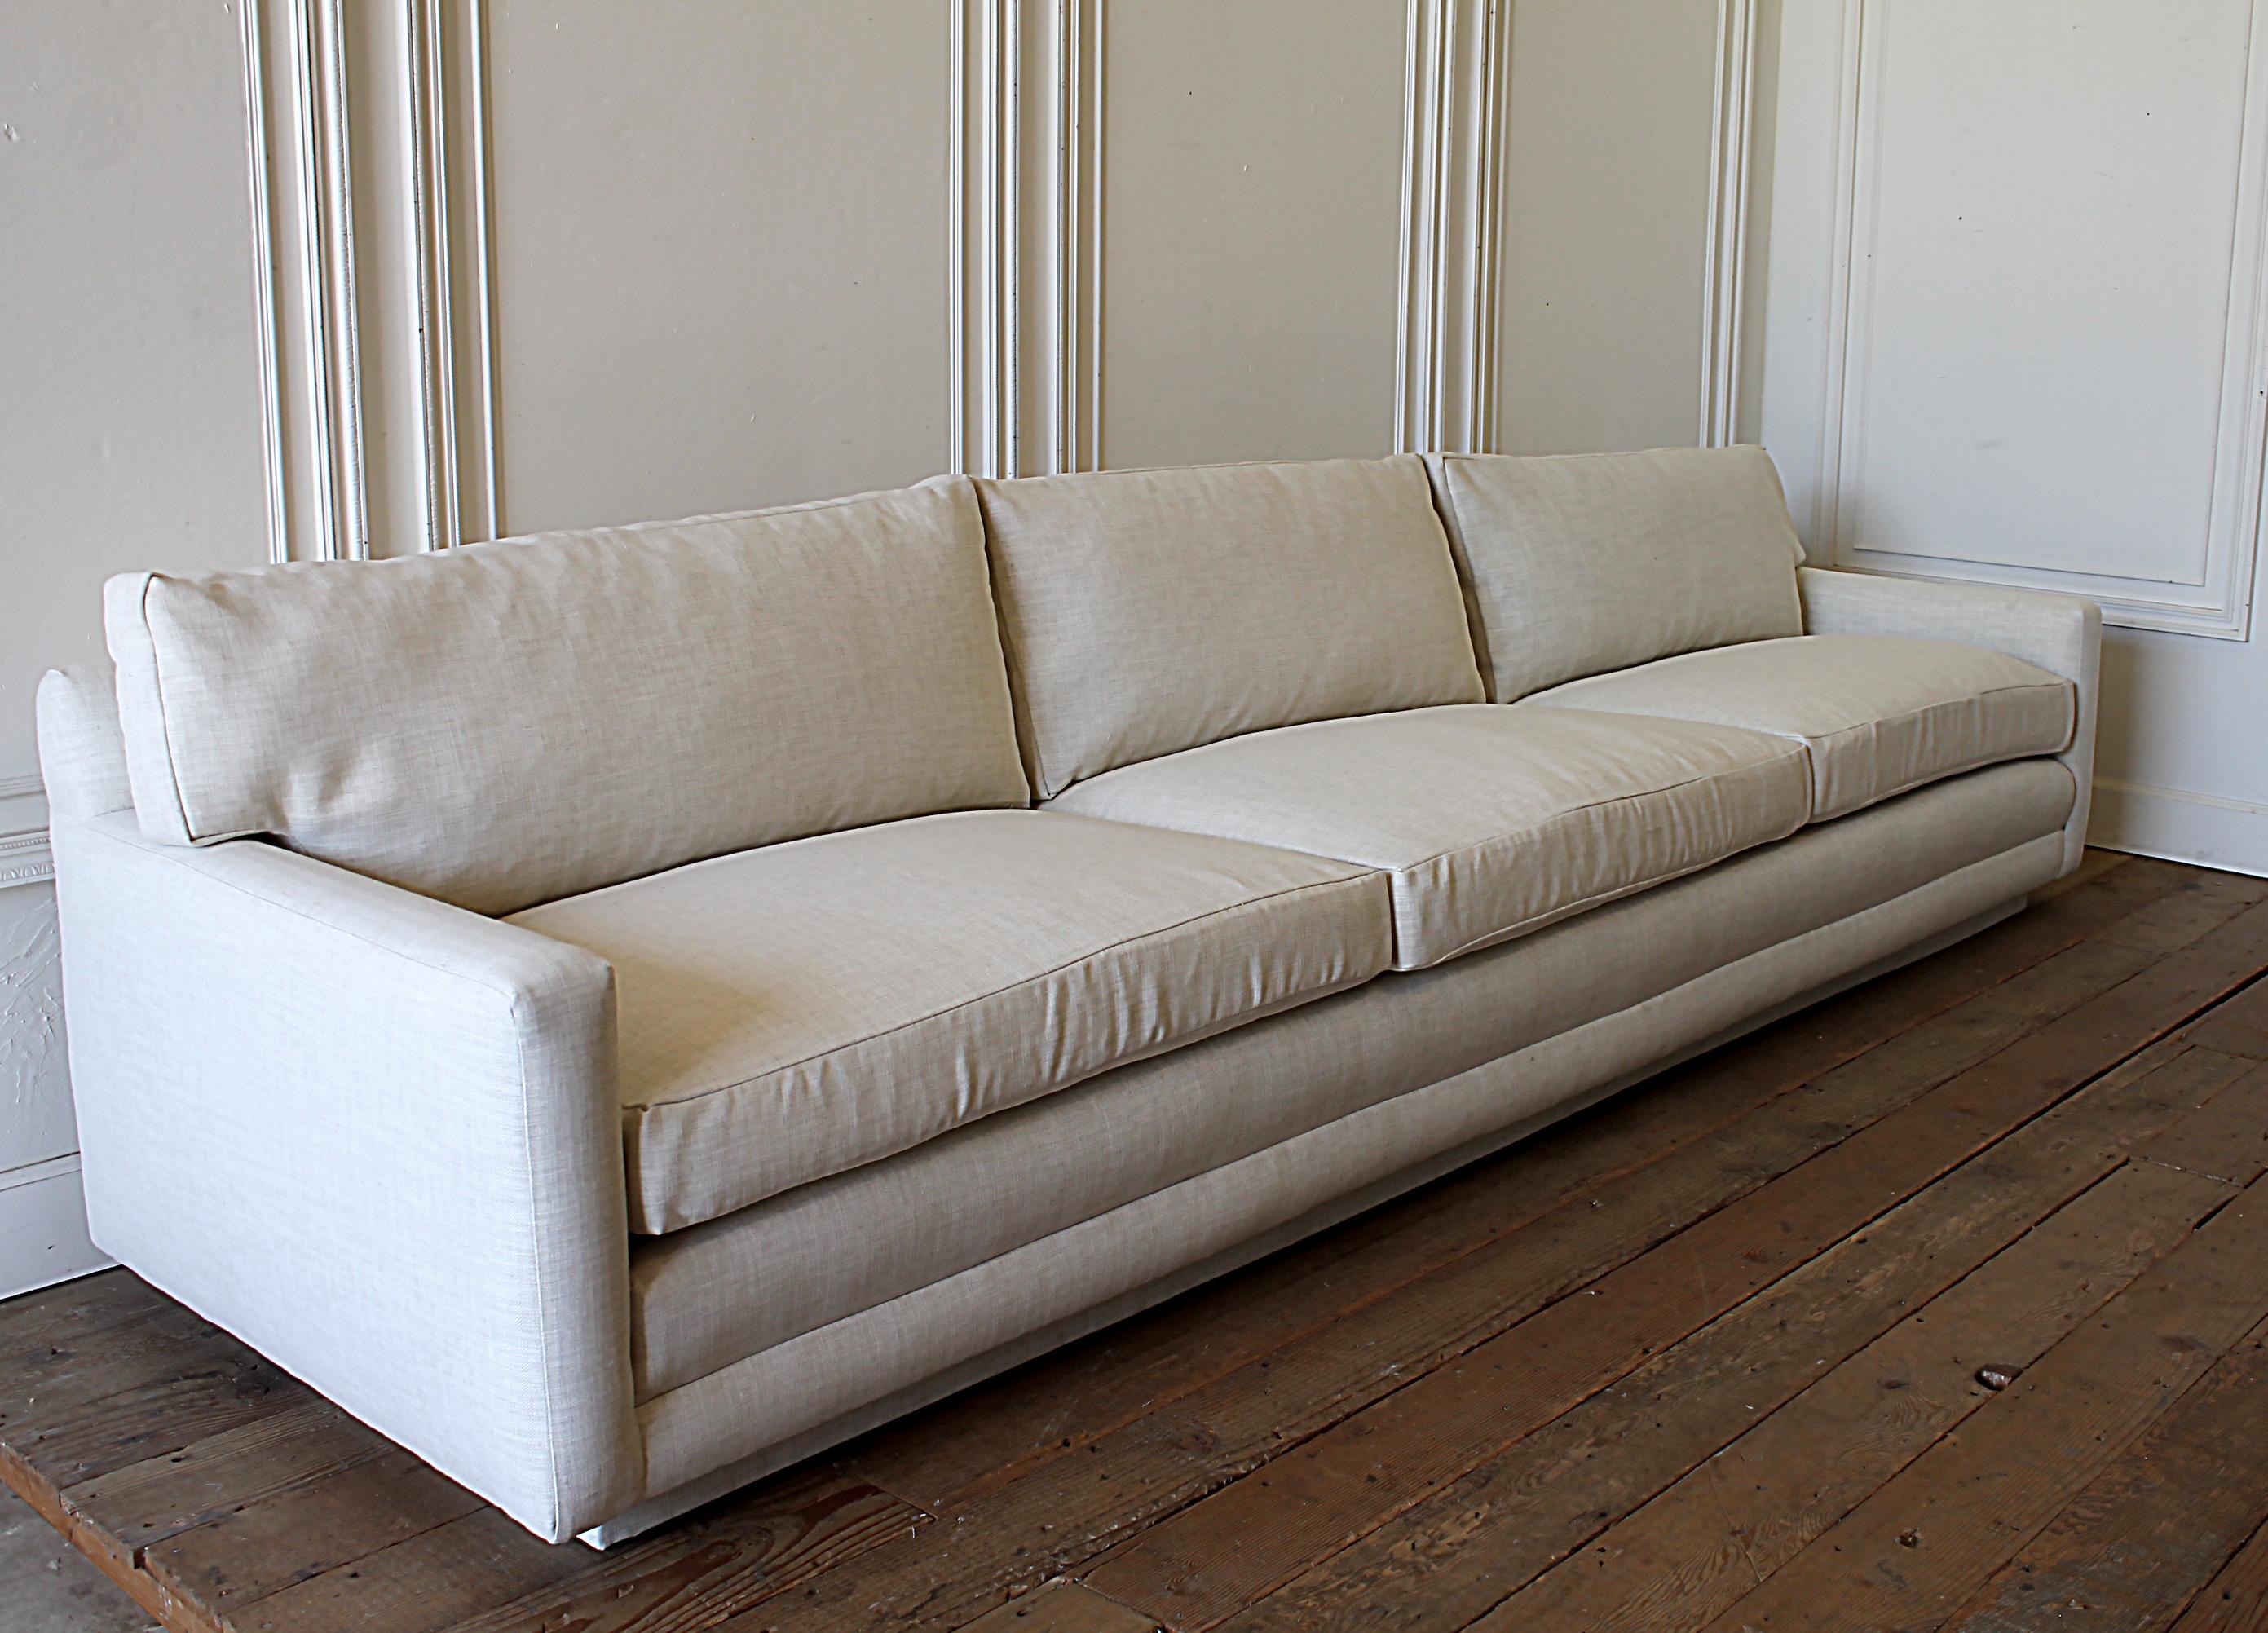 20th Century Mid-Century Modern Sofa Reupholstered in Natural Linen Blend Herringbone